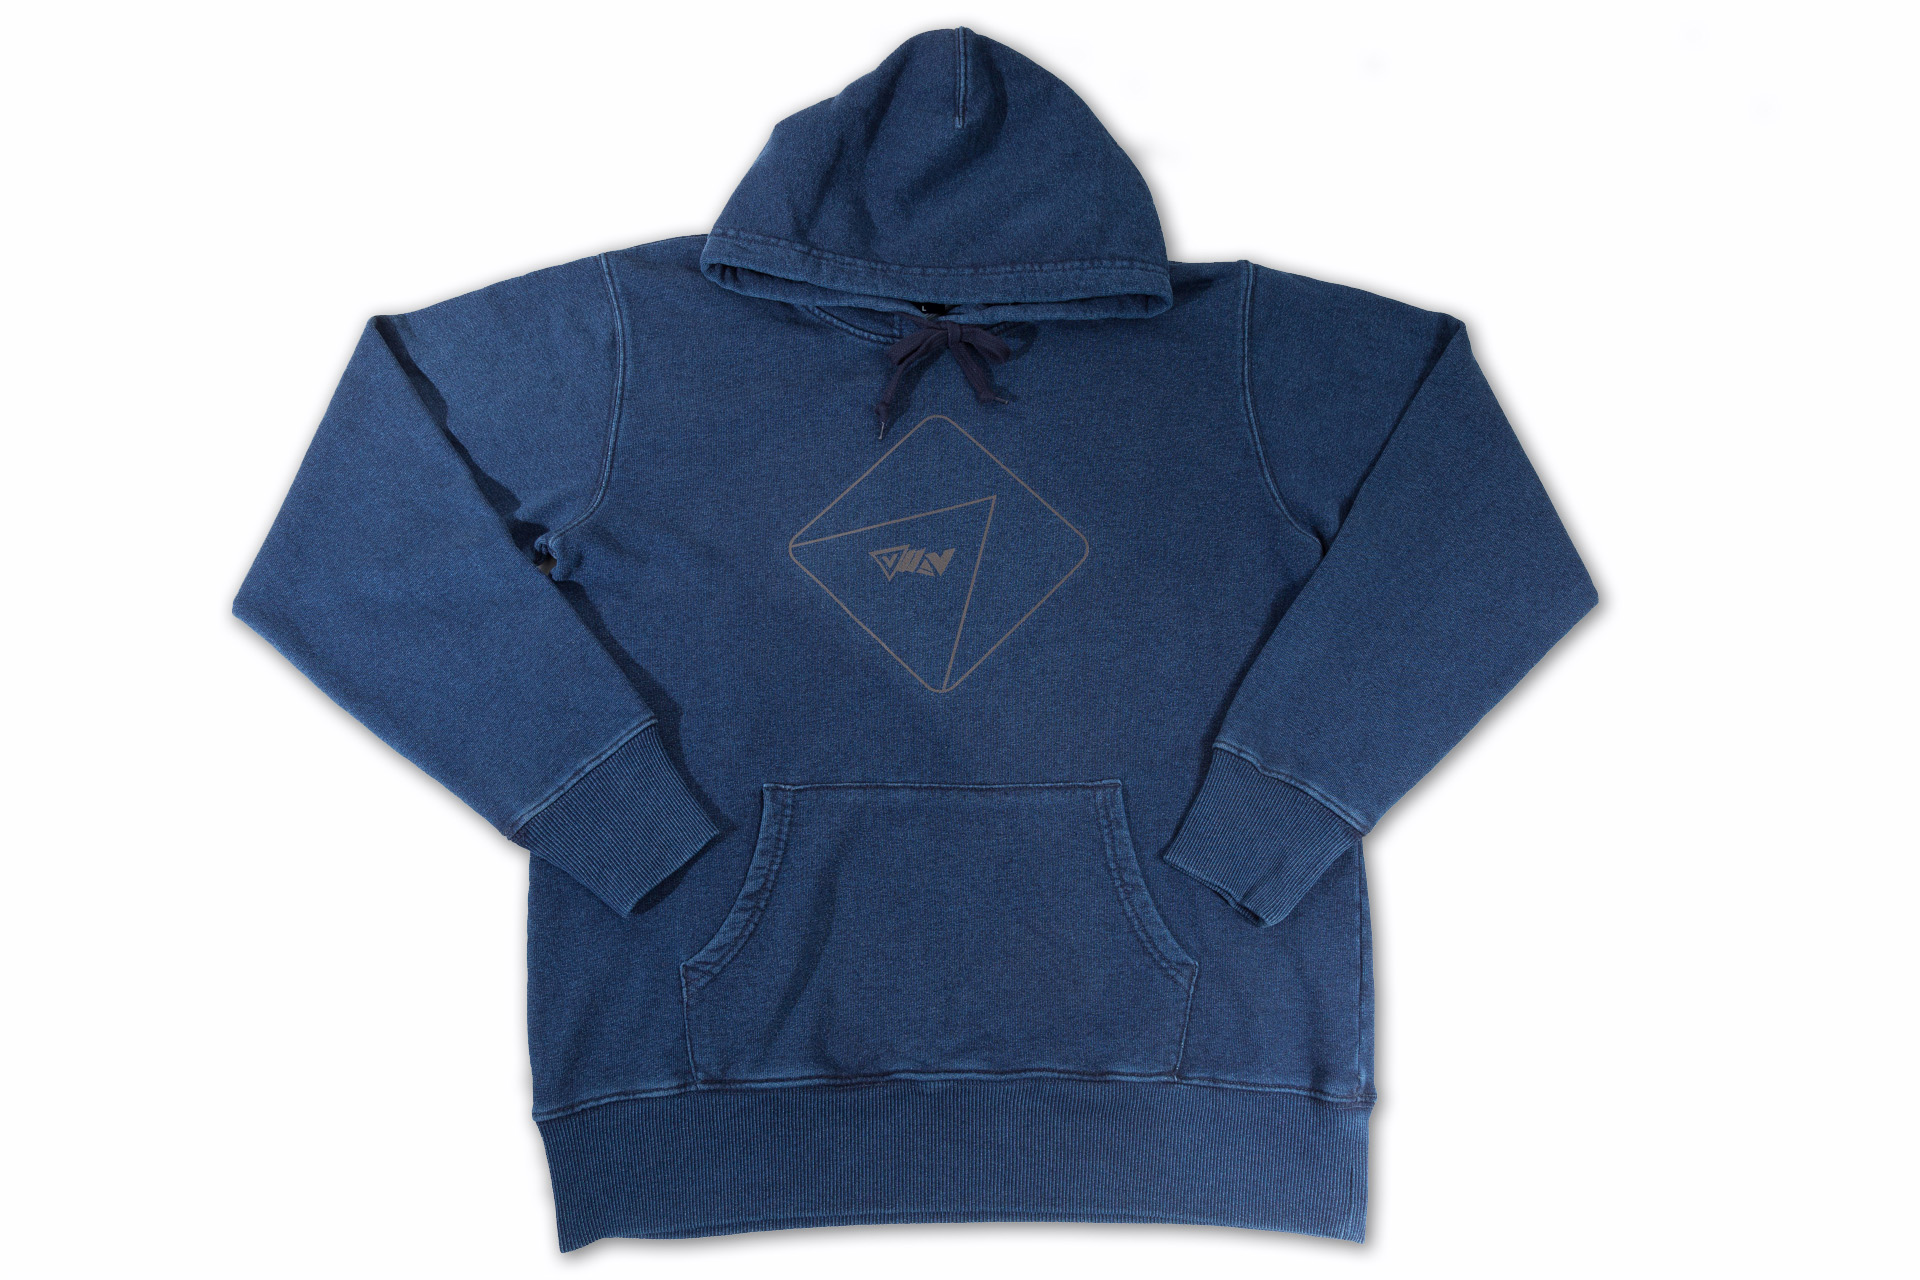 【Seven Art Value】”VIIAV” big logo 12.0 Oz. denim pullover hoodie